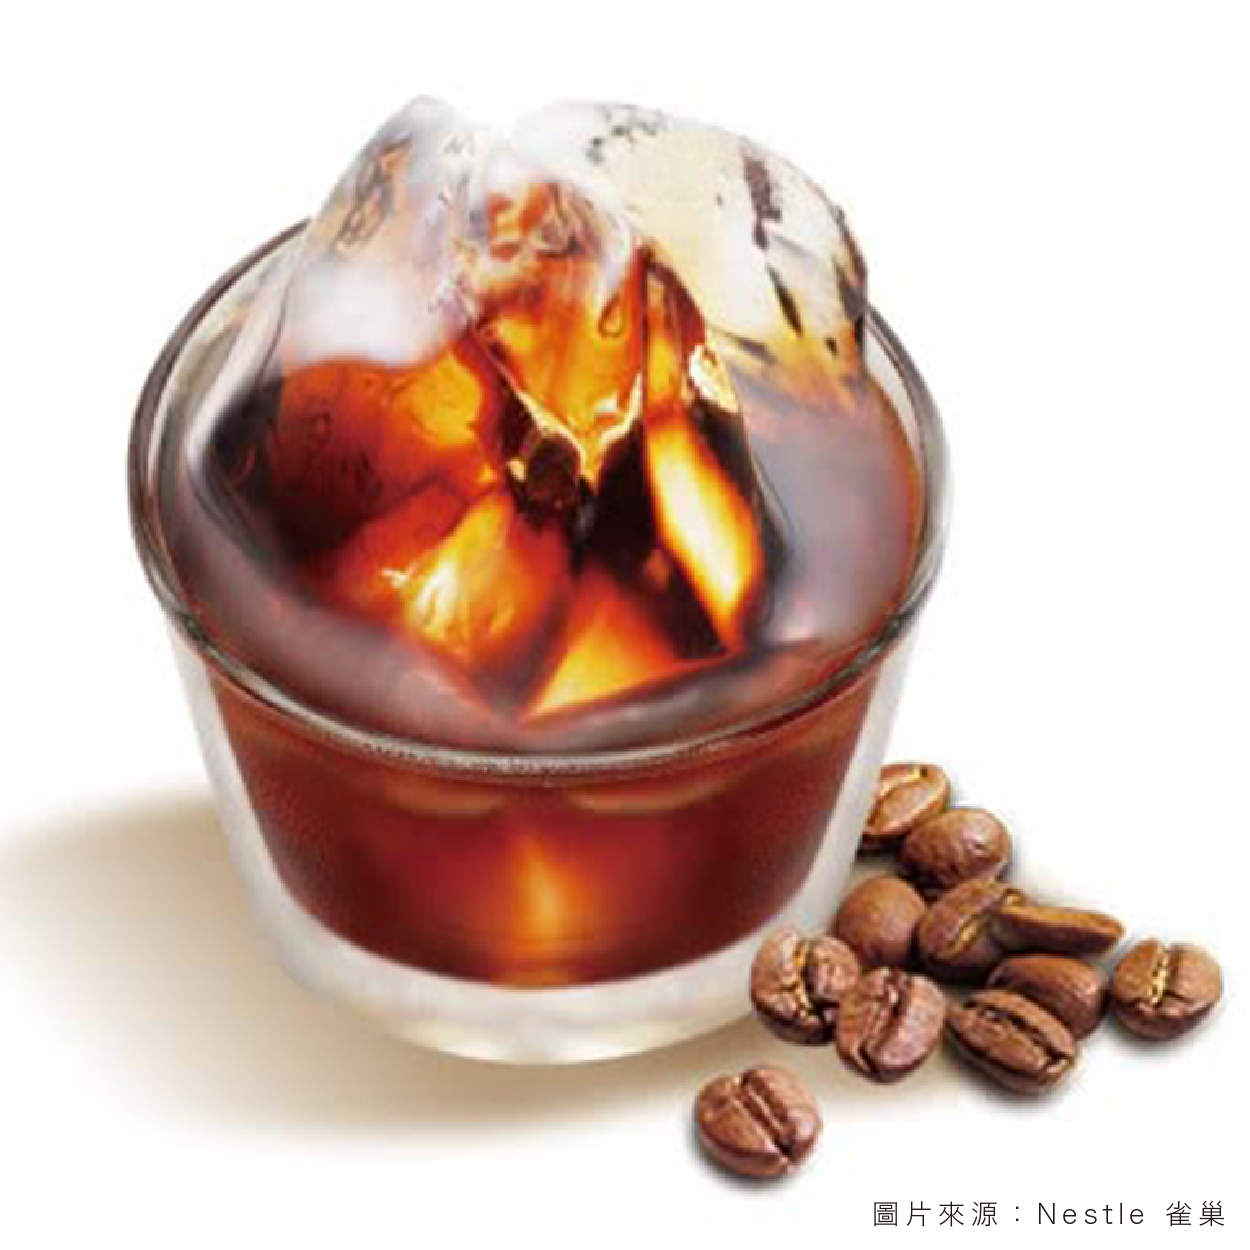 Nestle 雀巢 金牌冰萃濾袋咖啡 一口飲進冰萃清涼